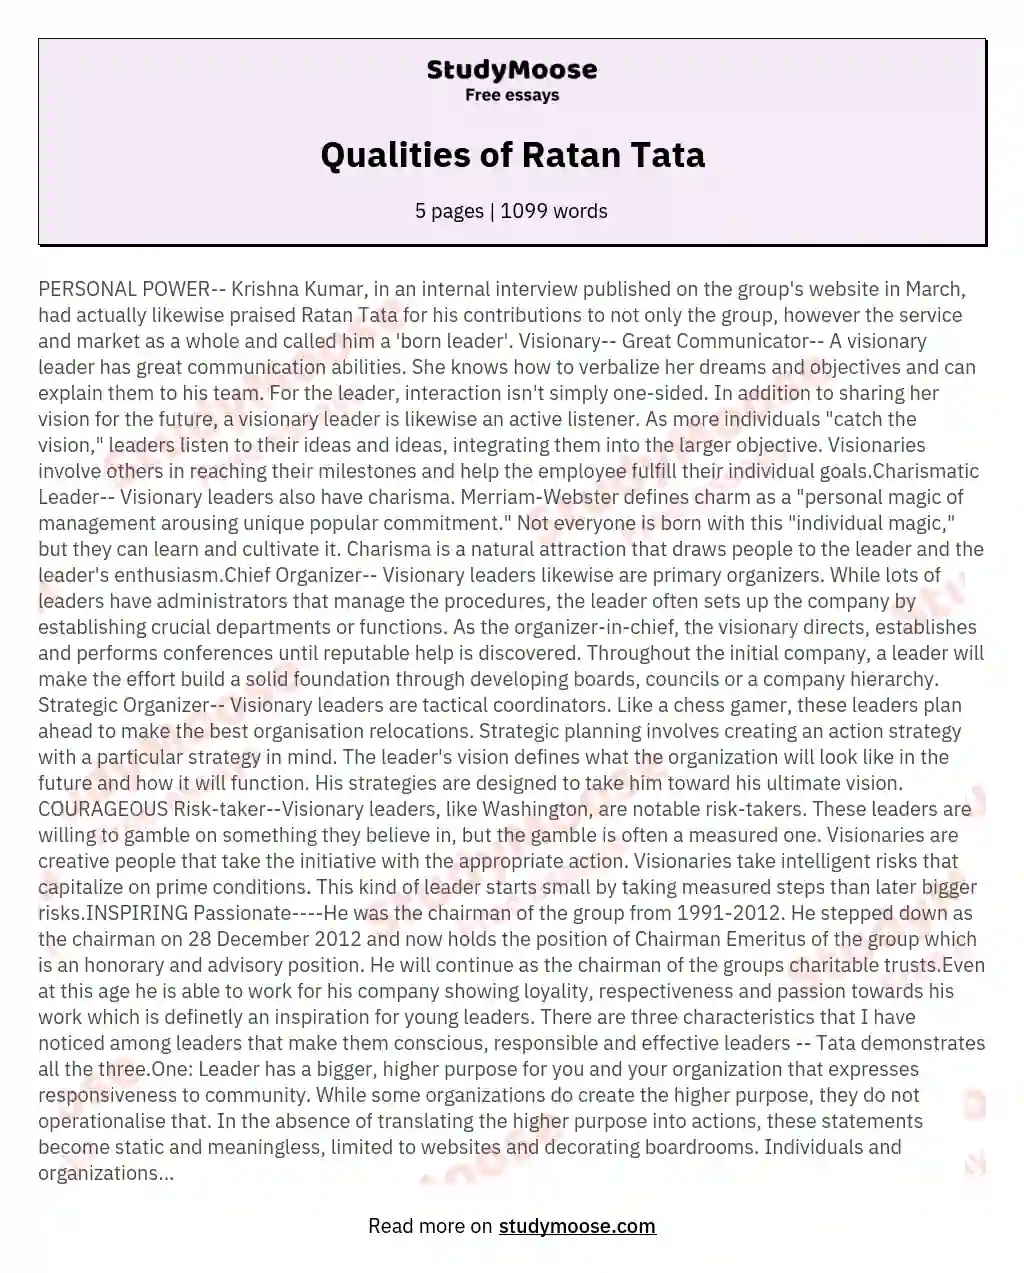 Qualities of Ratan Tata essay